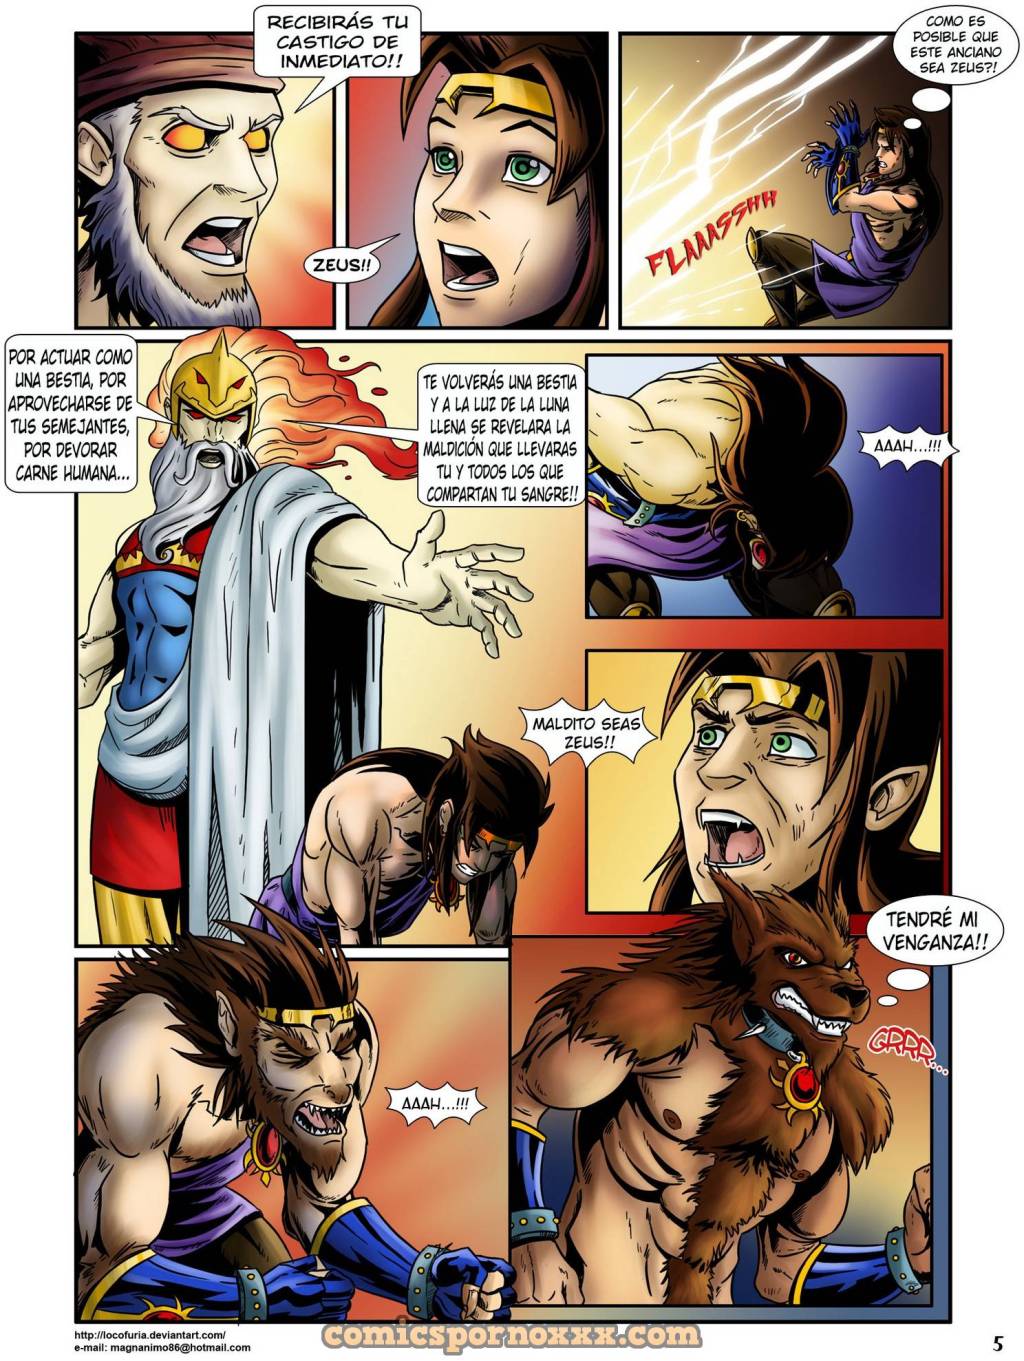 El Dios Lobo #1 (Lycaon) - 6 - Comics Porno - Hentai Manga - Cartoon XXX